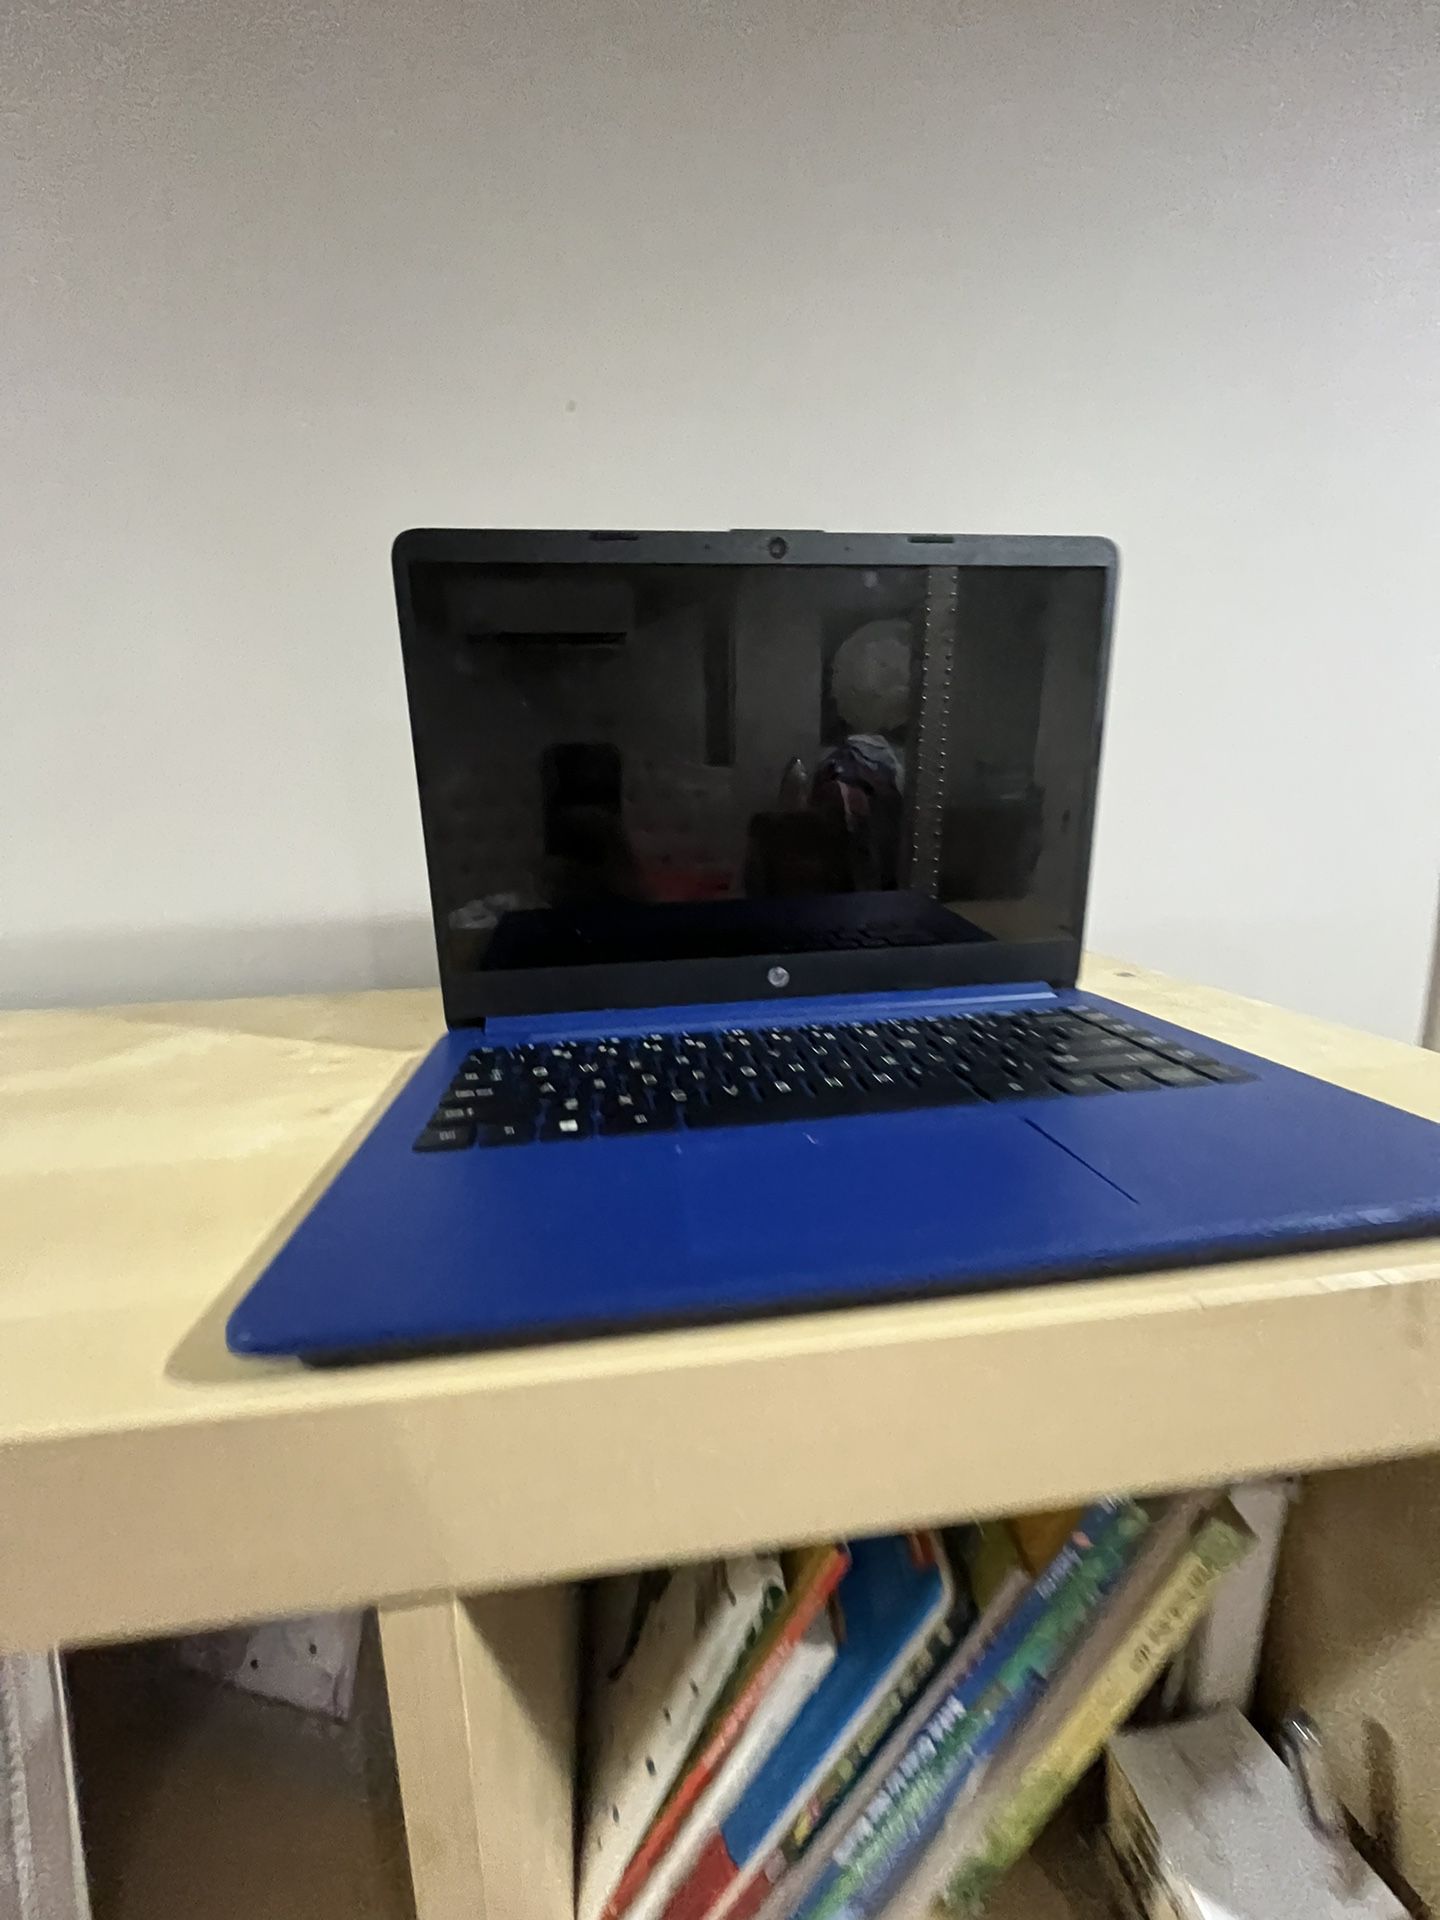 A Blue Hp Laptop